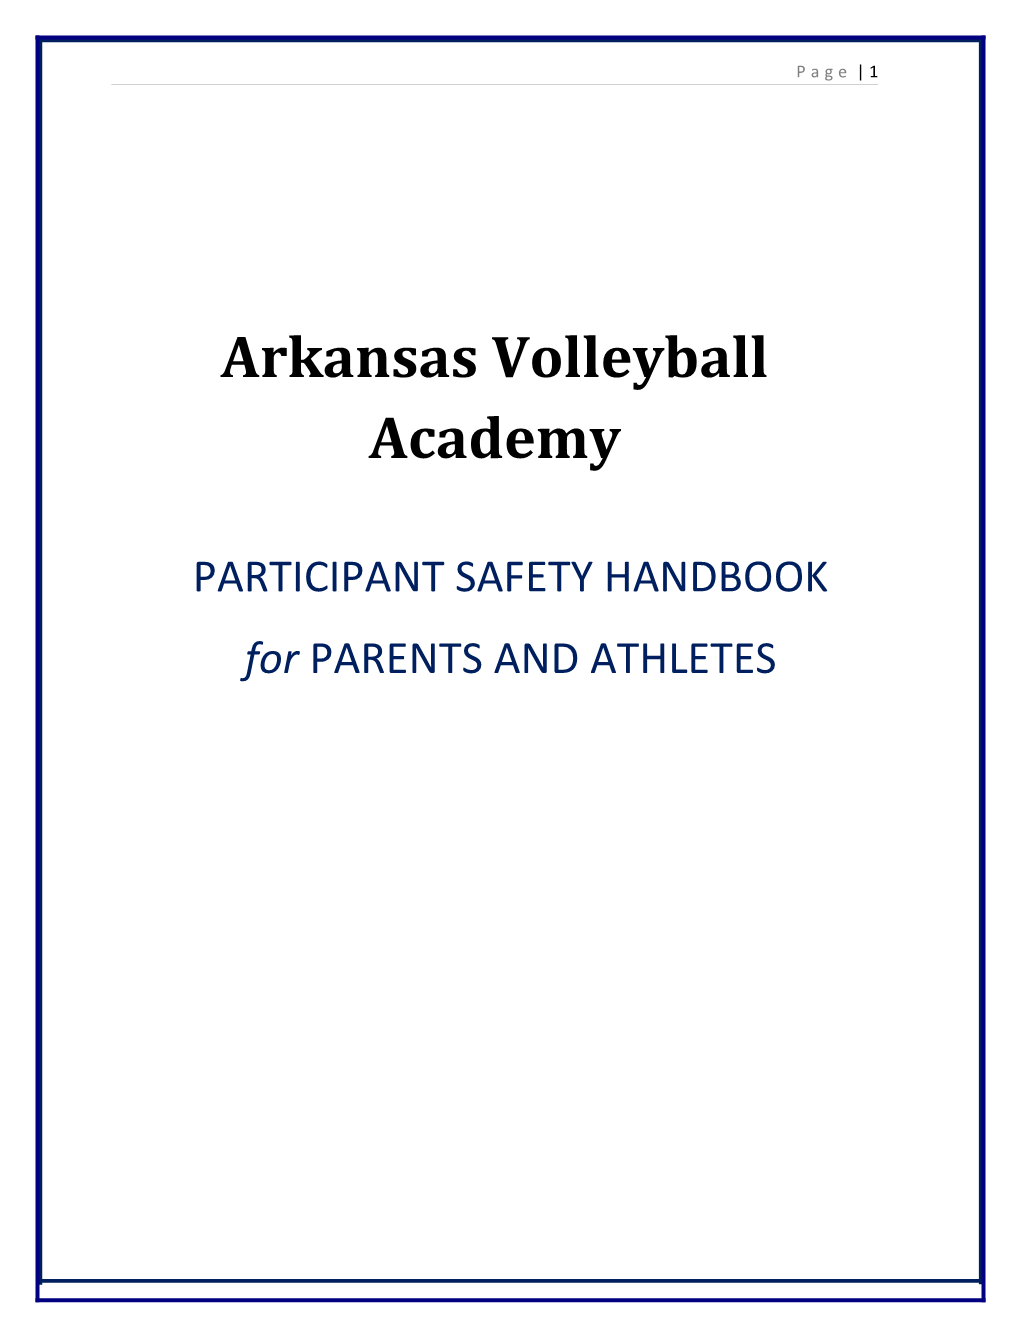 Arkansas Volleyball Academy